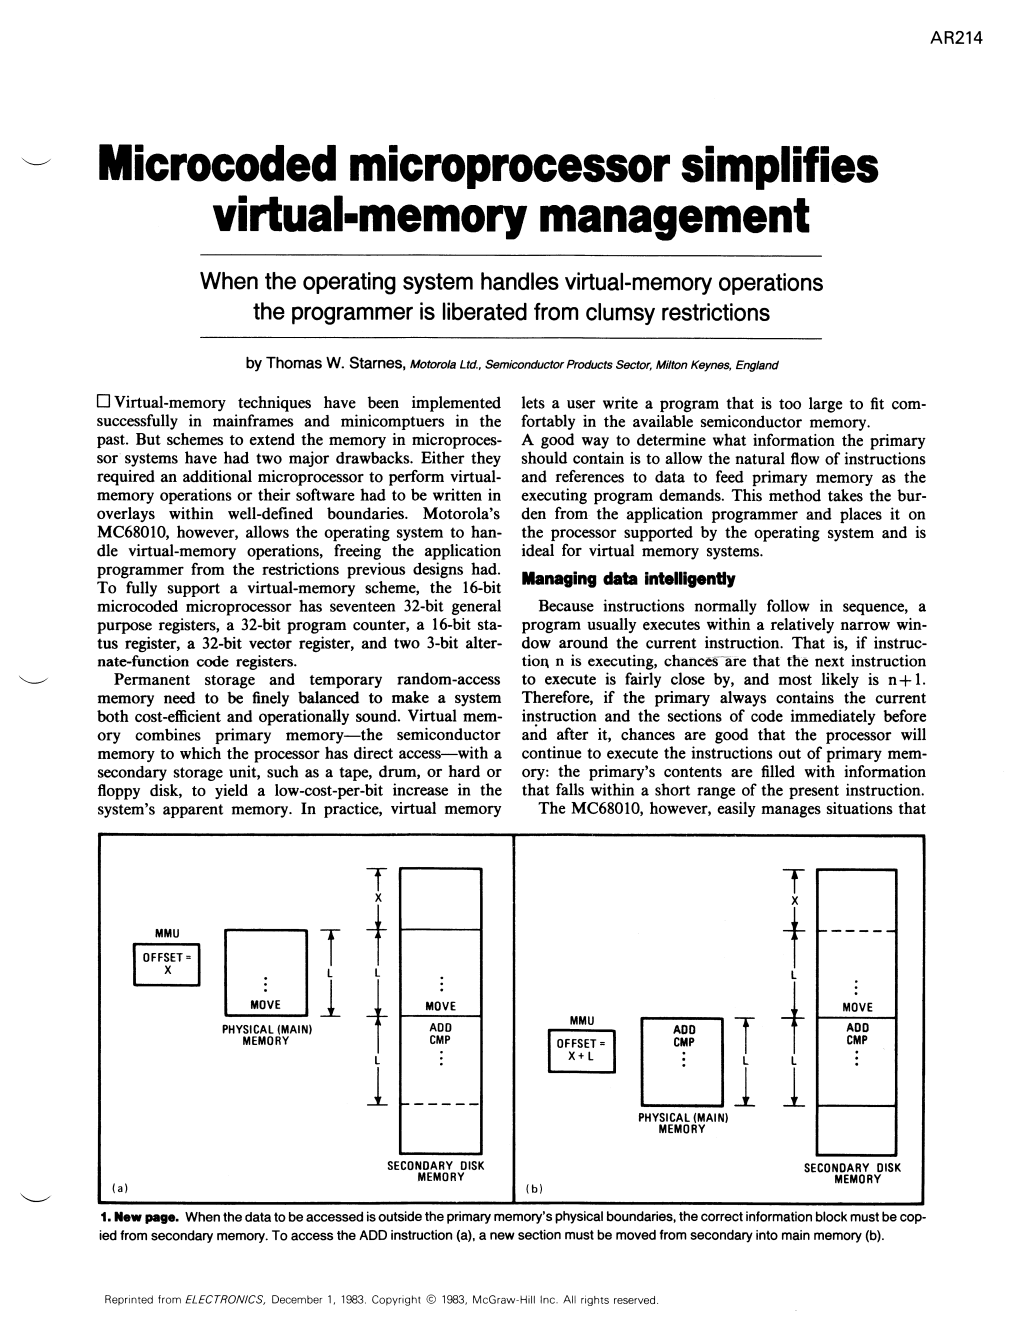 AR214 Microcoded Microprocessor Simplifies Virtual-Memory